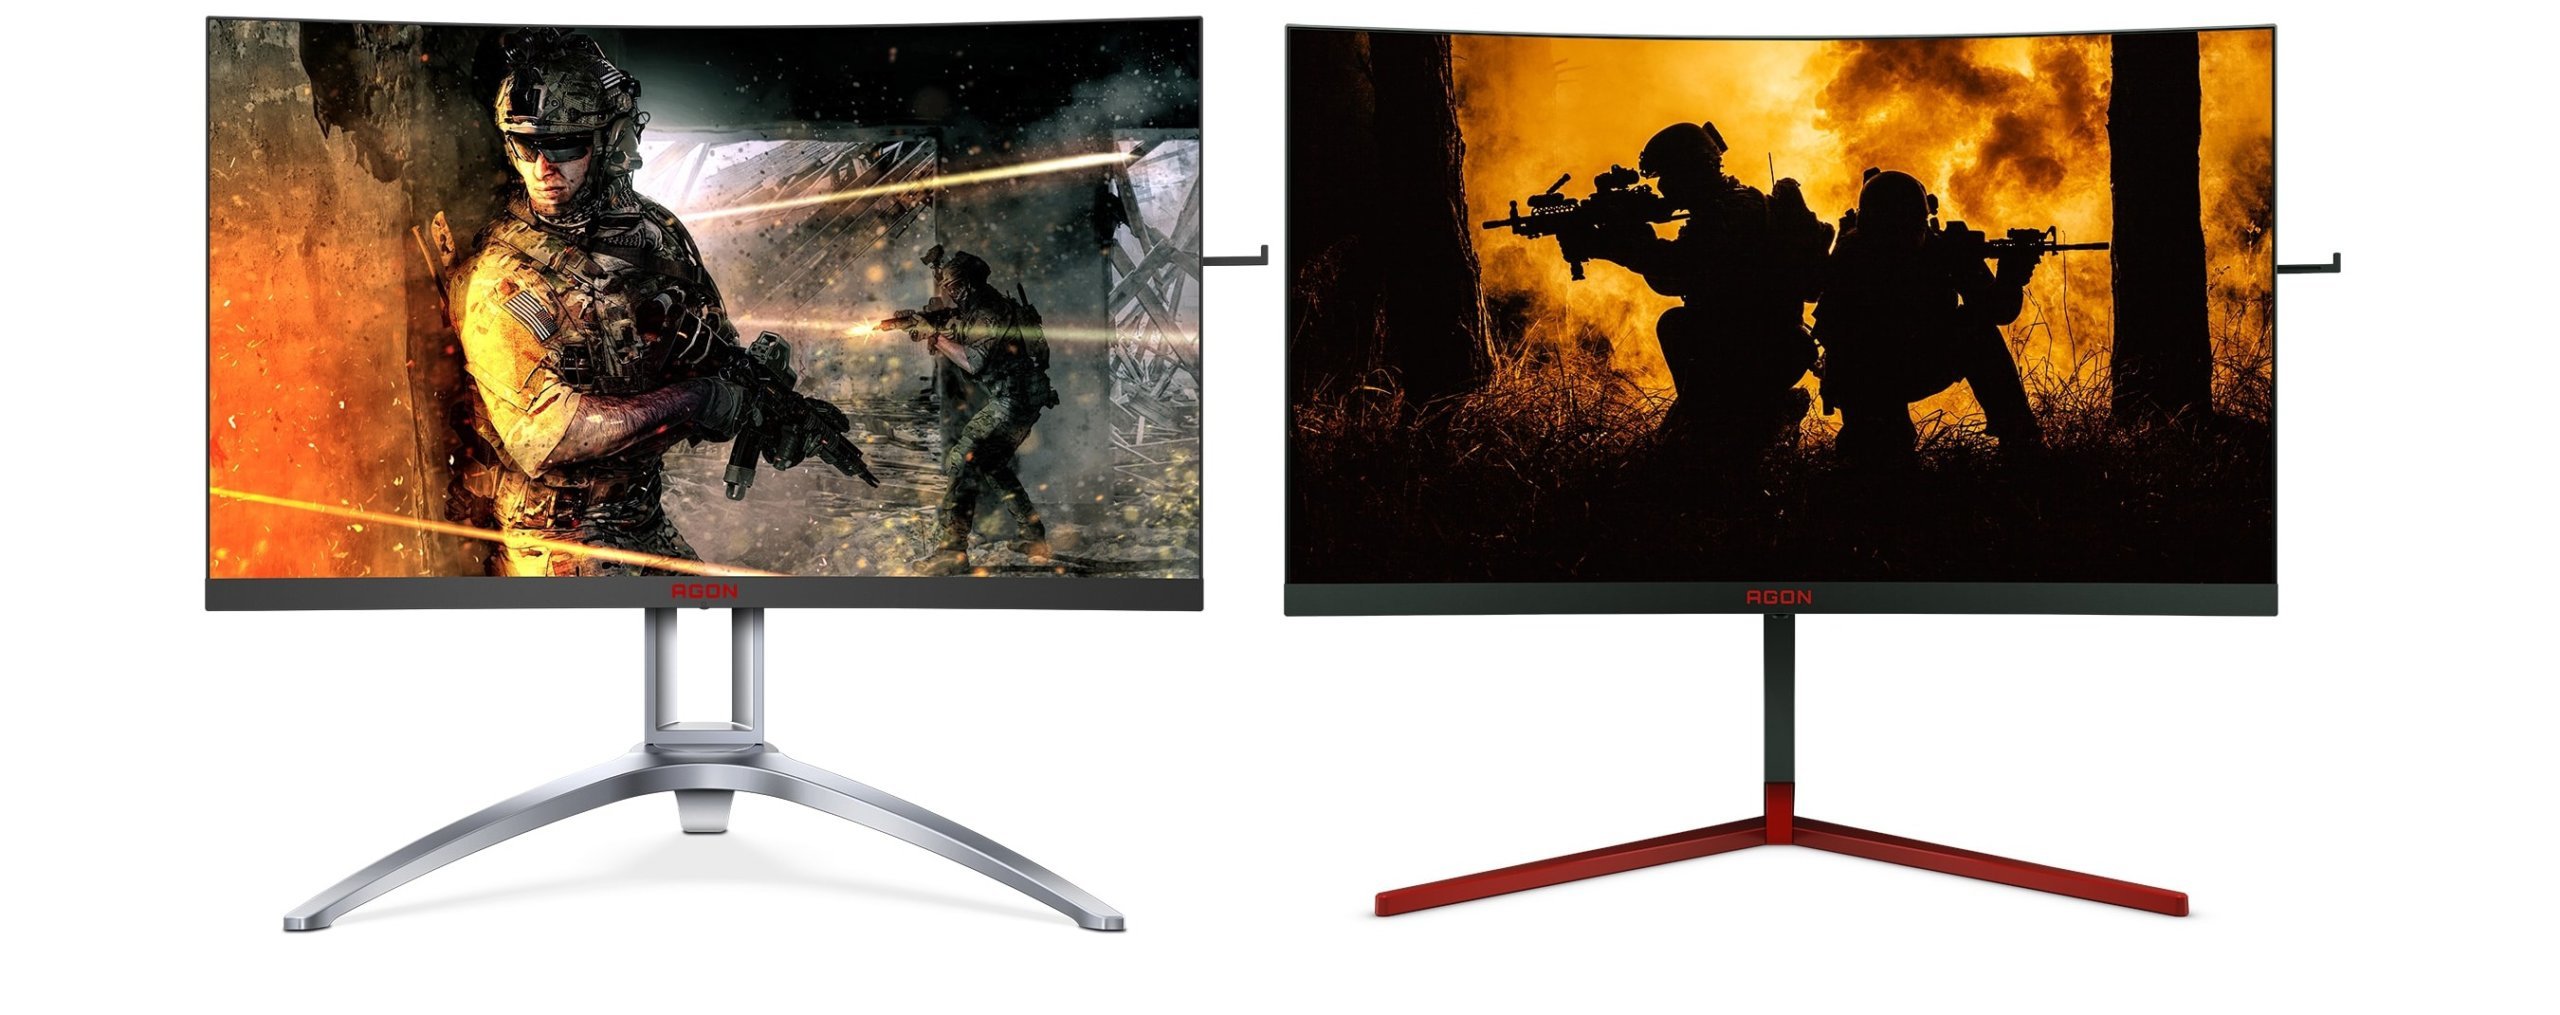 AOC pokazał na Gamescomie dwa nowe monitory gamingowe